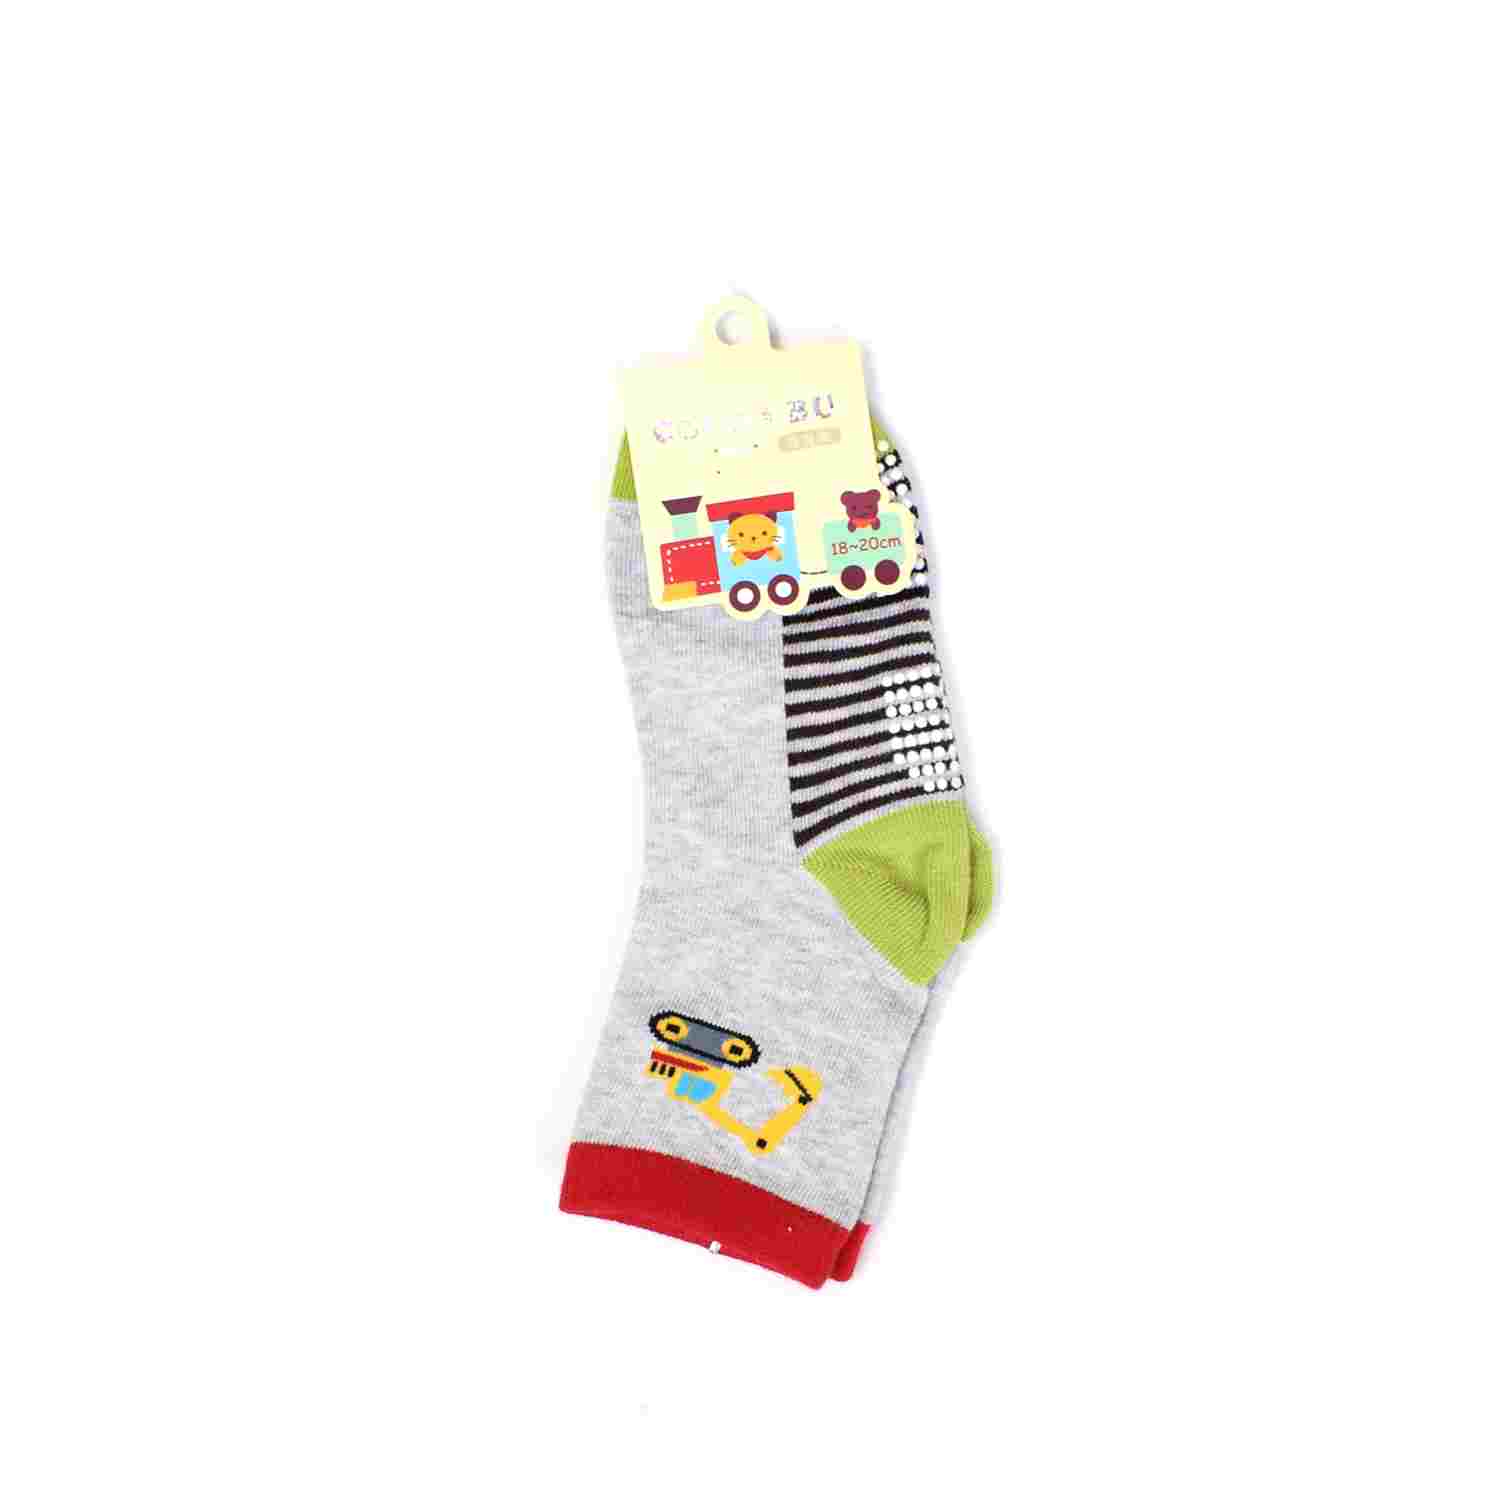 COCO BU Grip Socks With JCB Print (18-20cm) - Gray